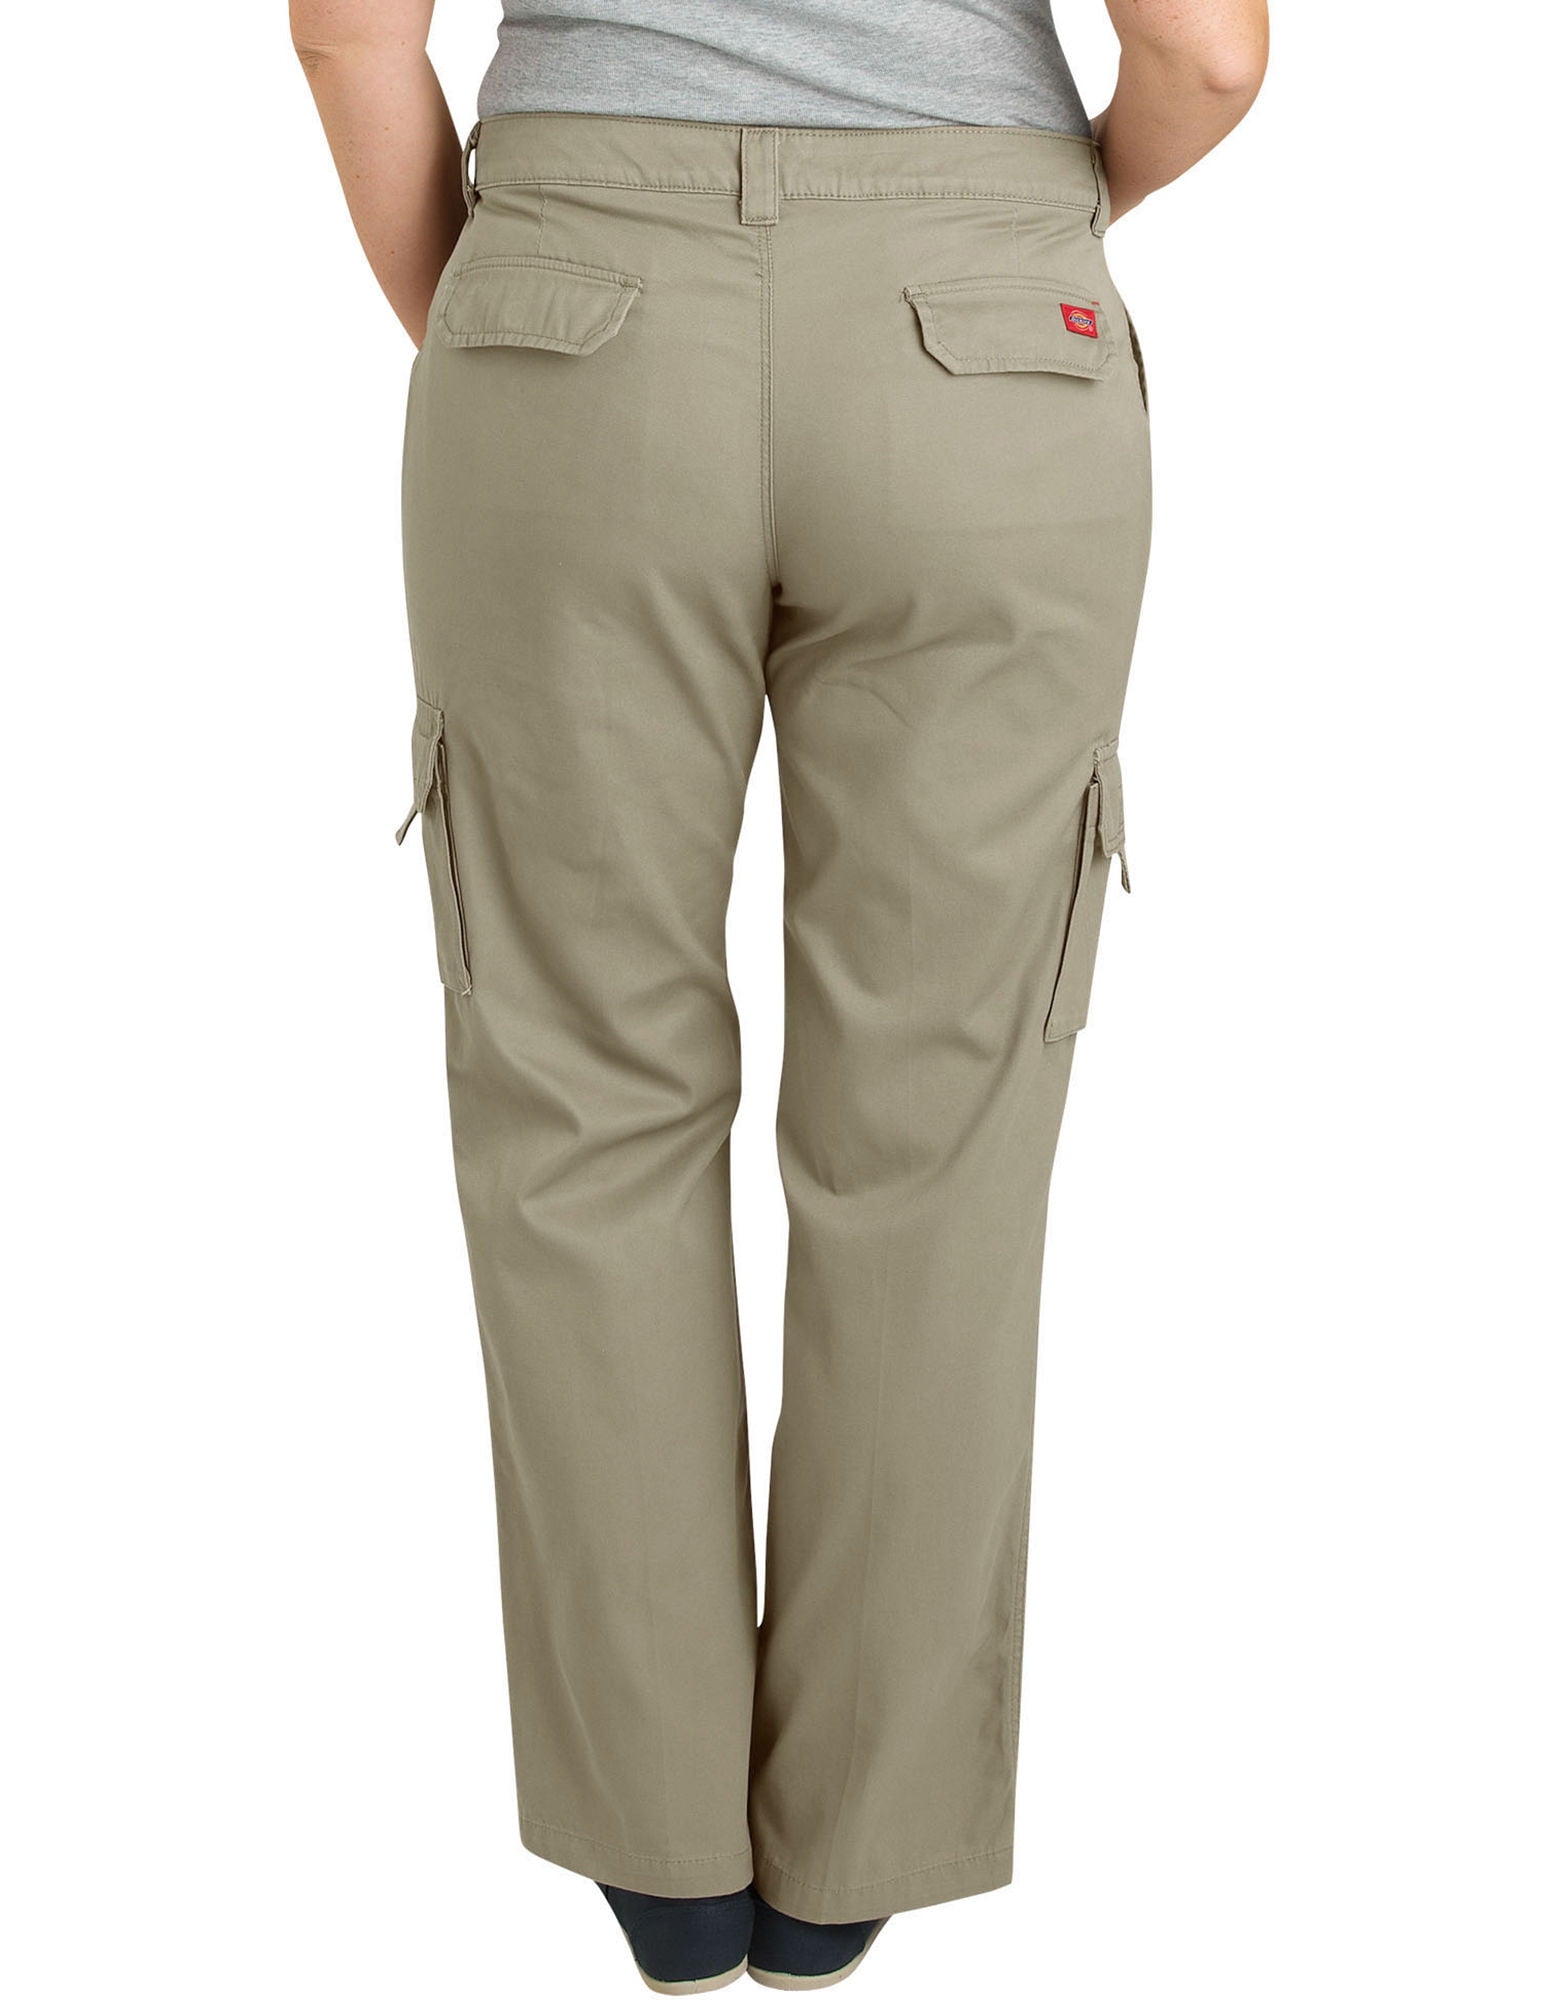 Women's Plus Size Relaxed Cargo Pants - Walmart.com